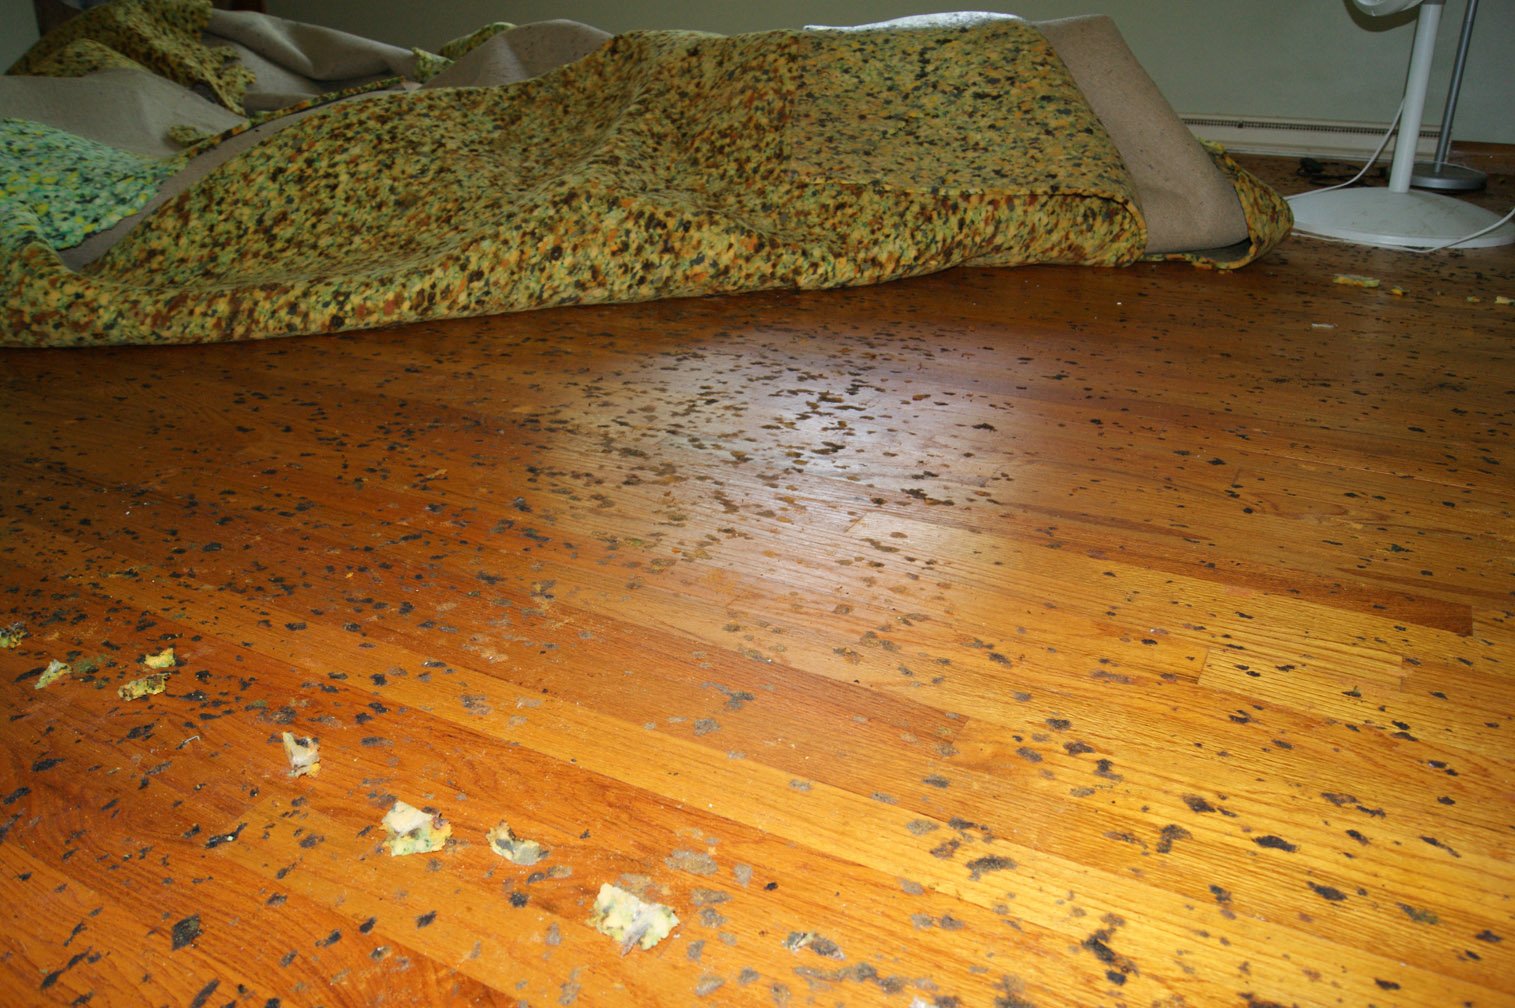 Black Mold Spots On Carpet